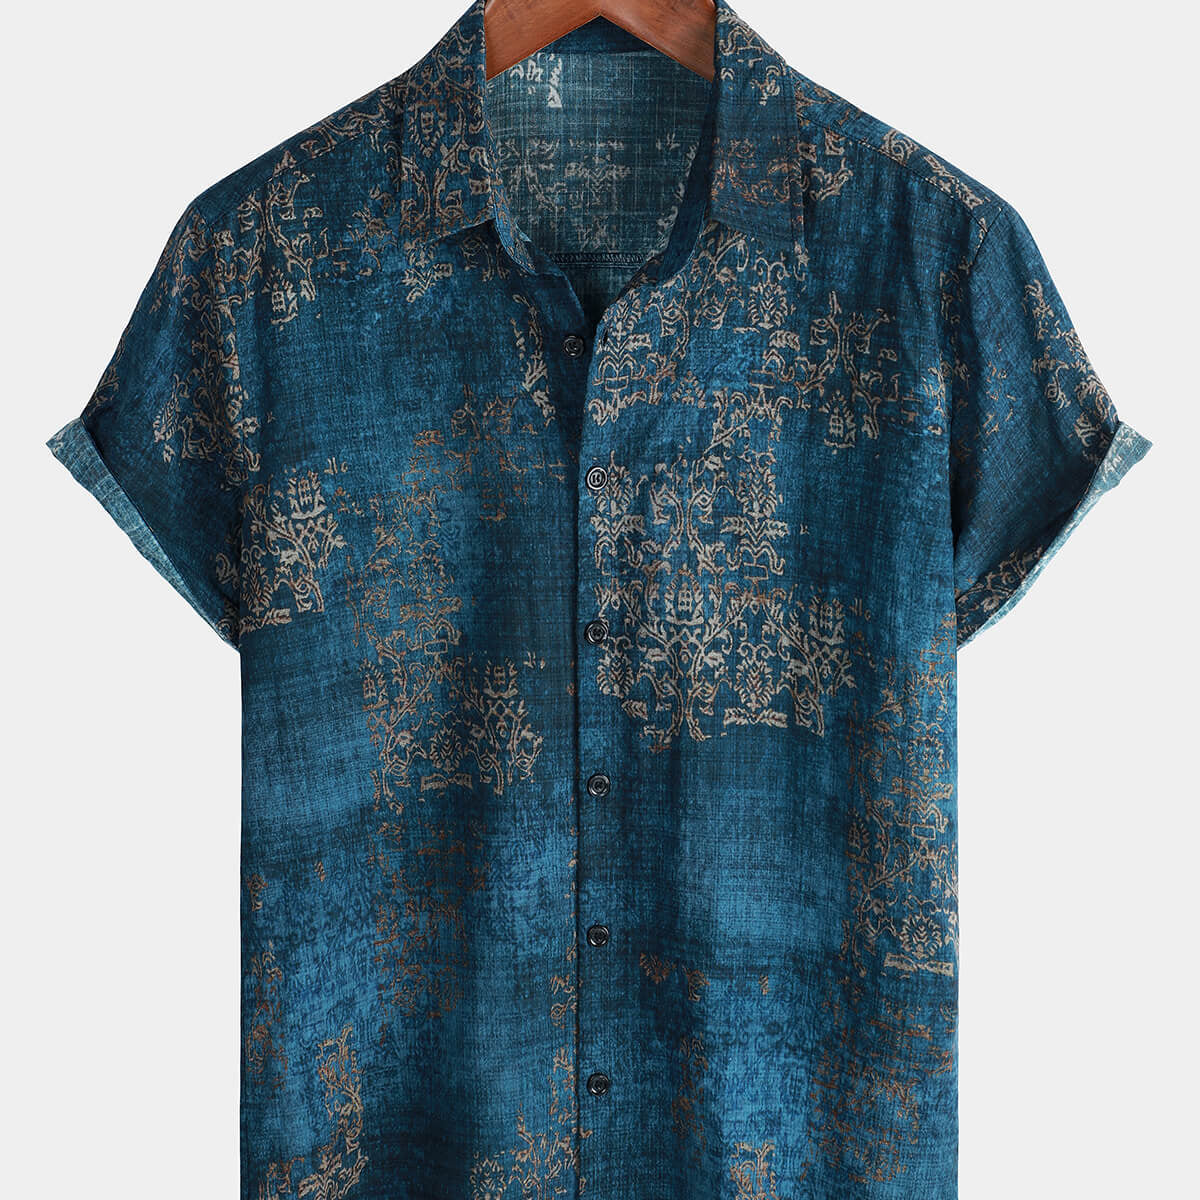 Men's Blue Cotton Vintage Short Sleeve Summer Button Up Shirt